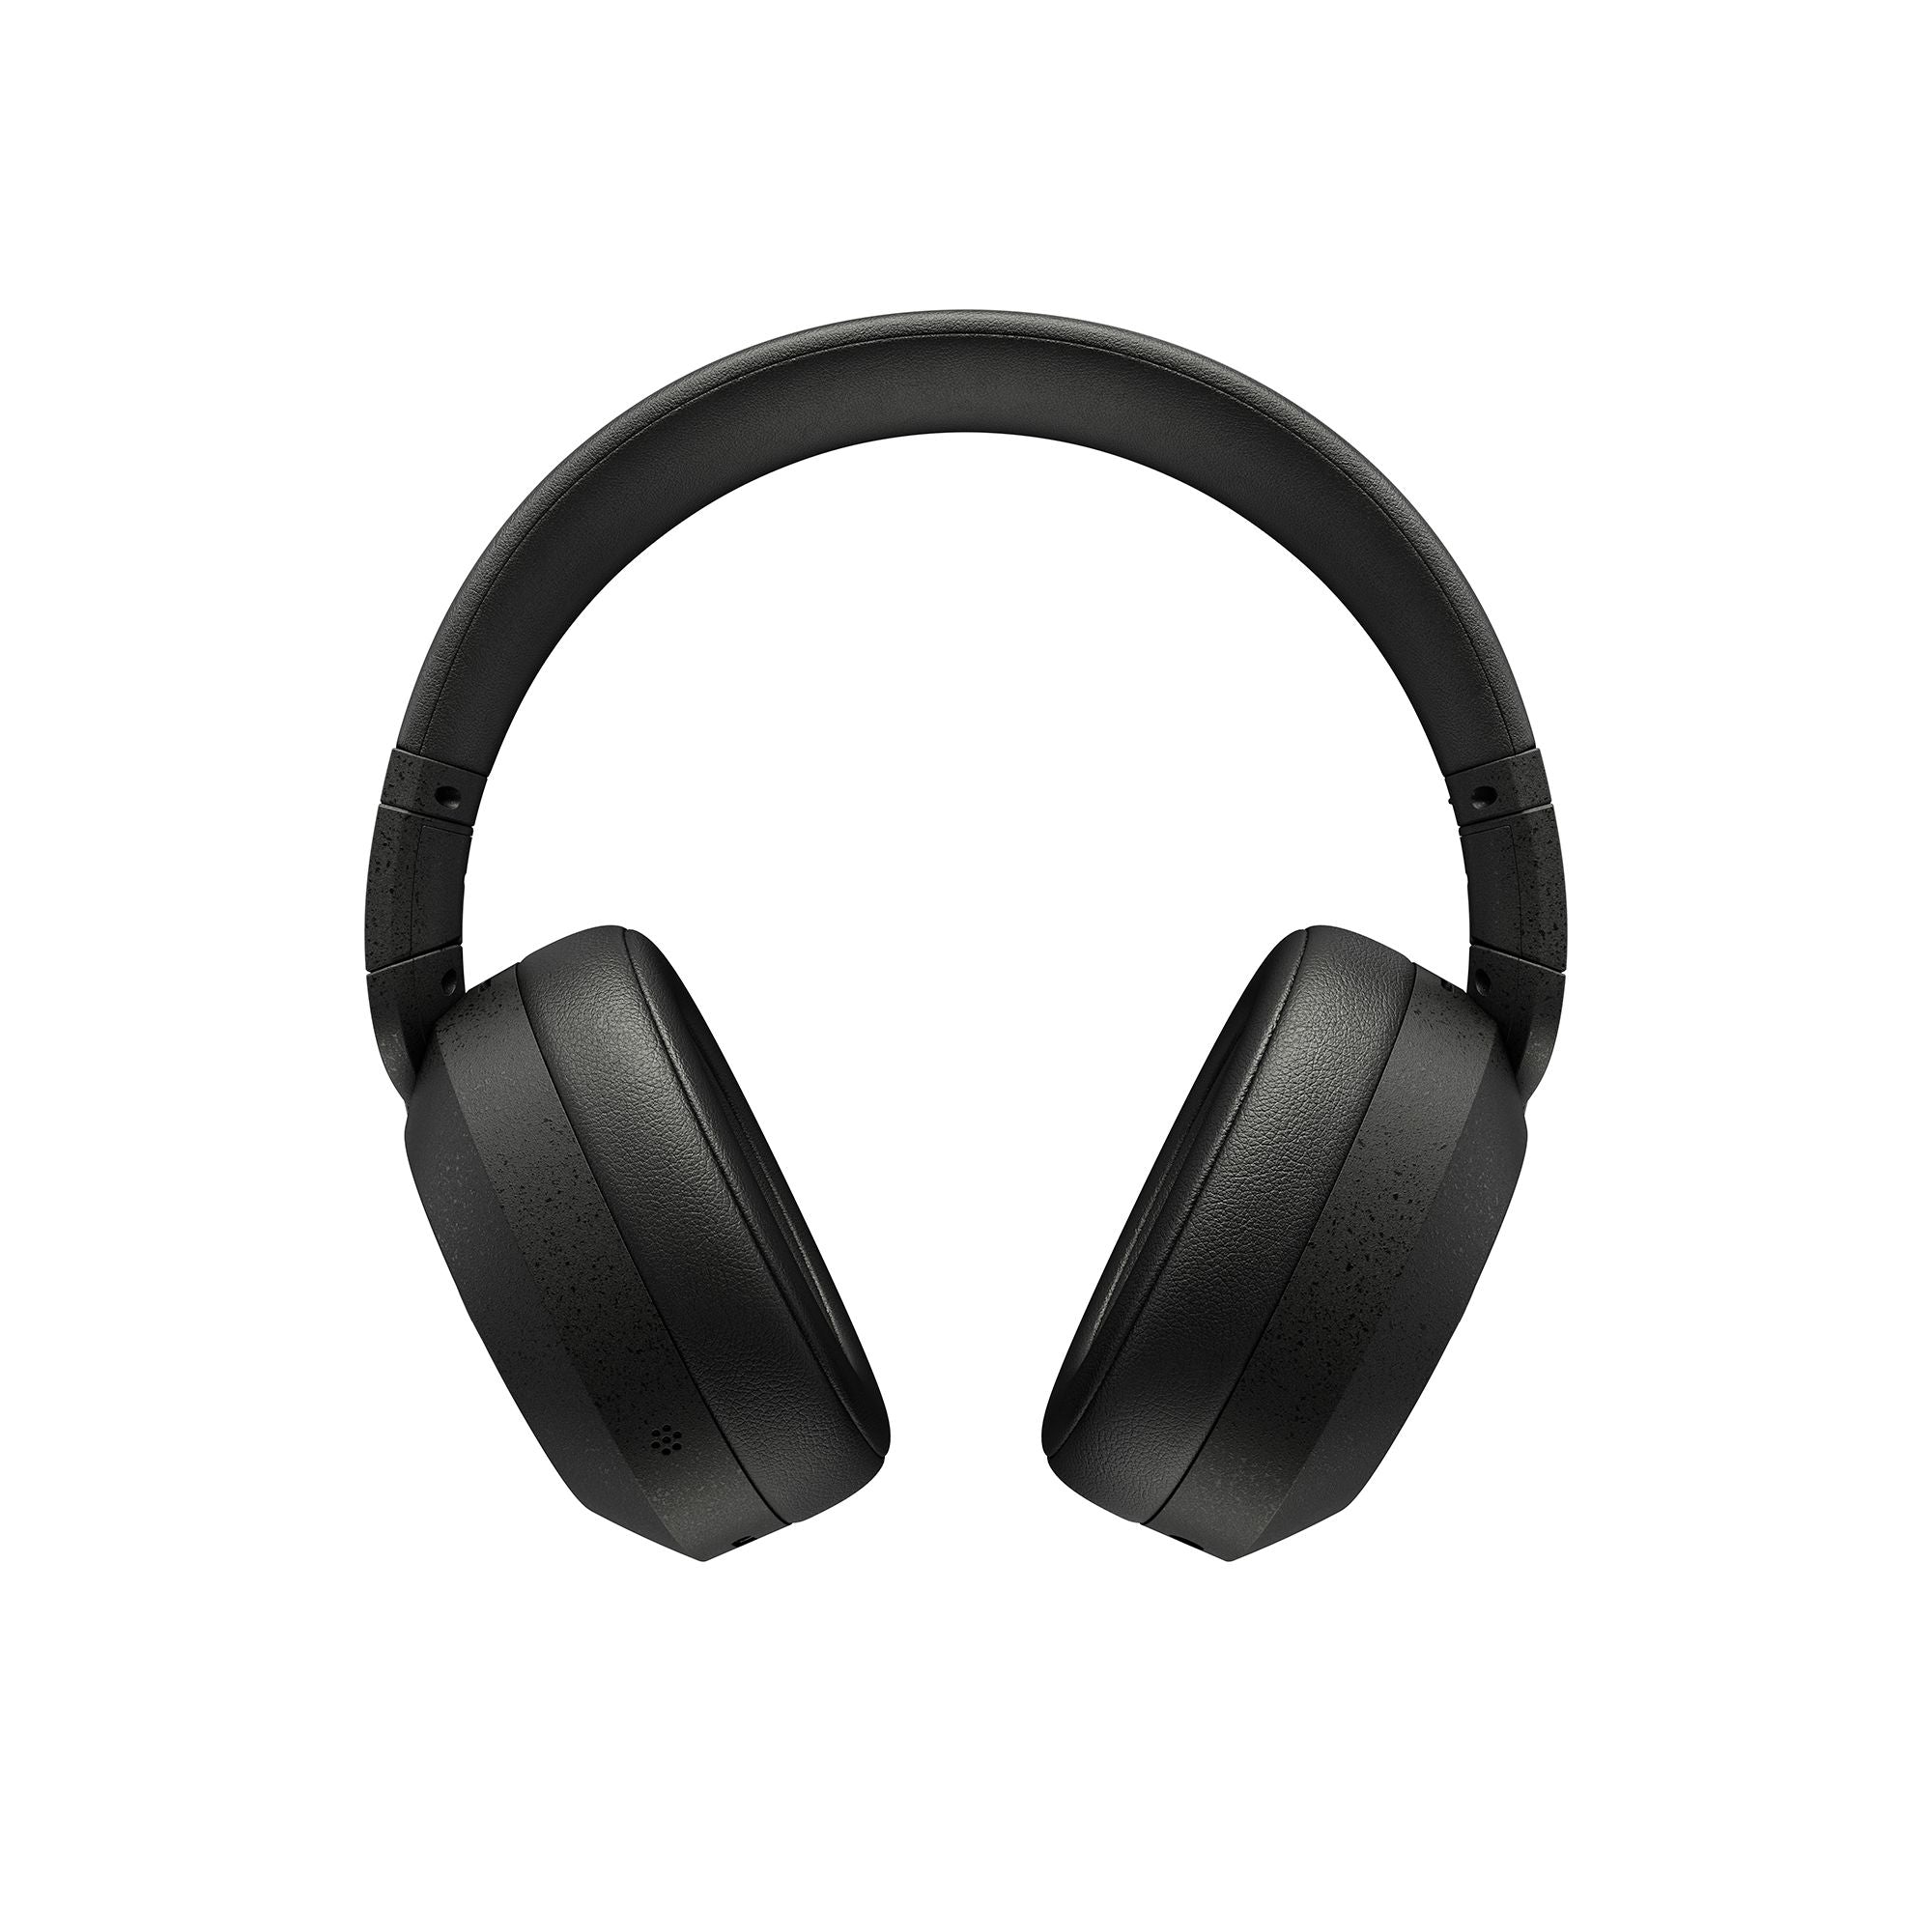 Yamaha YH-E700B noise canceling headphones